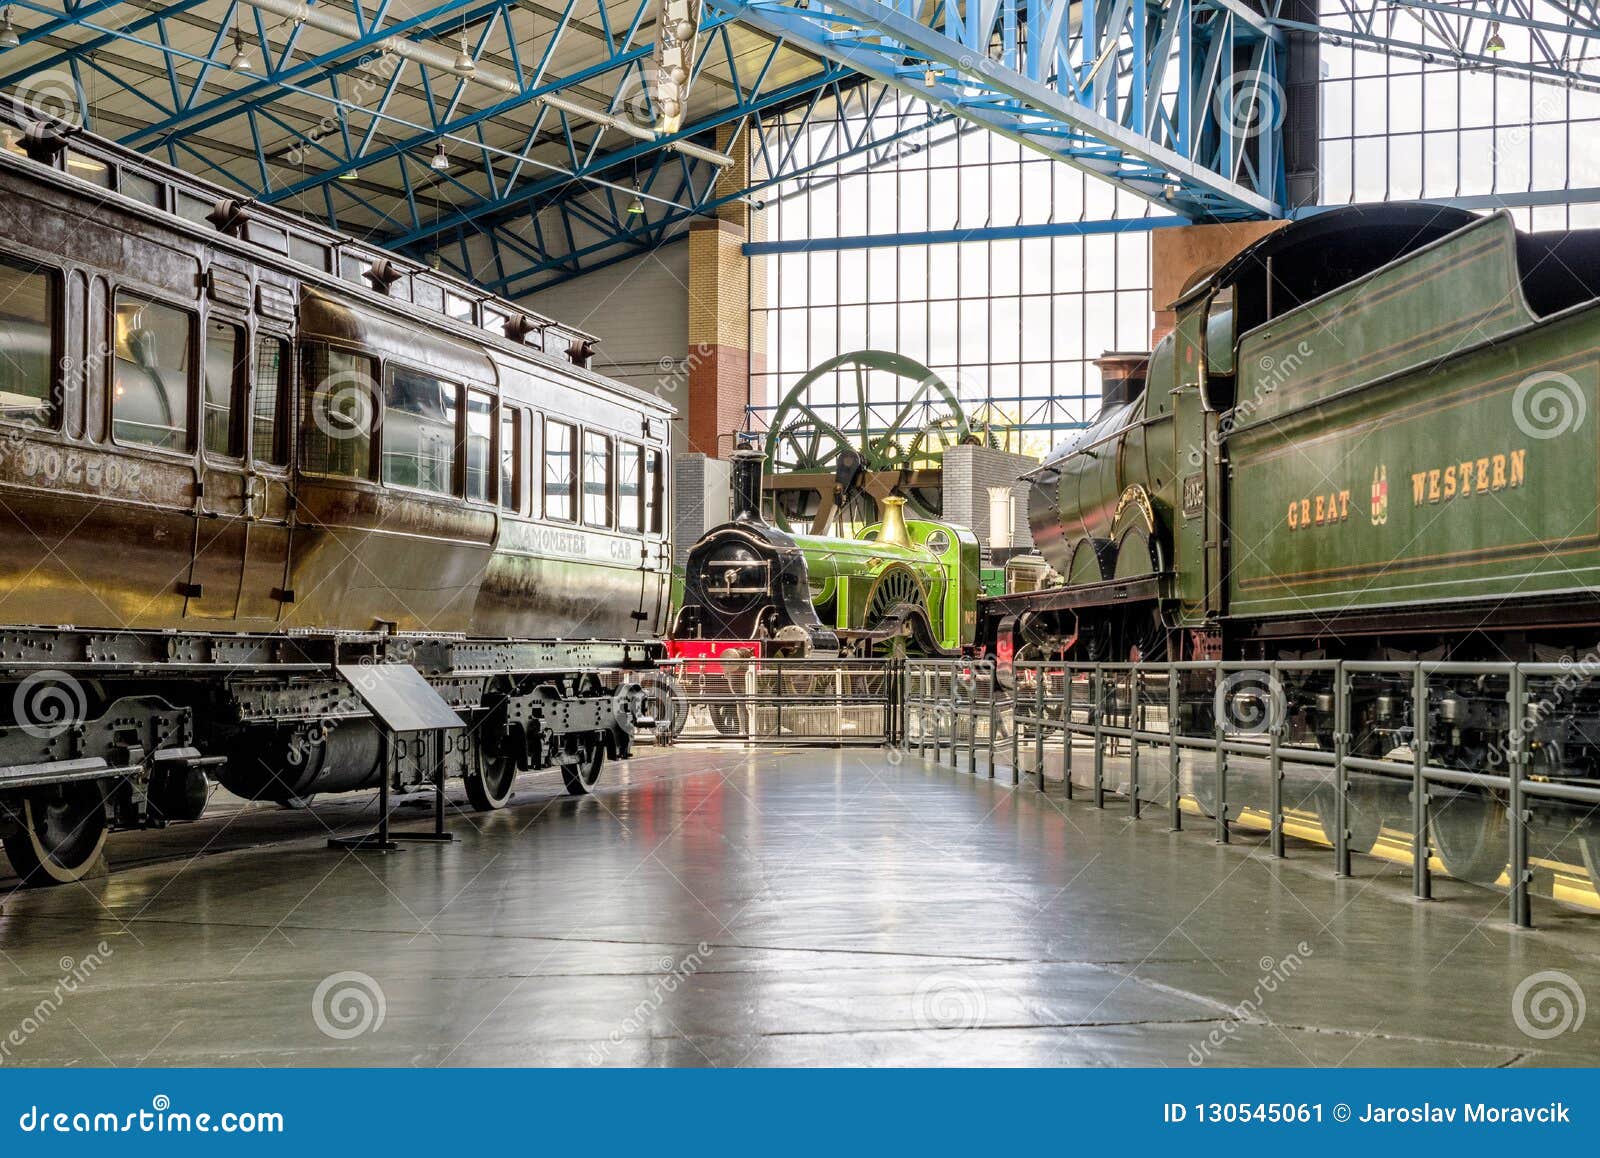 Steam museum in london фото 84